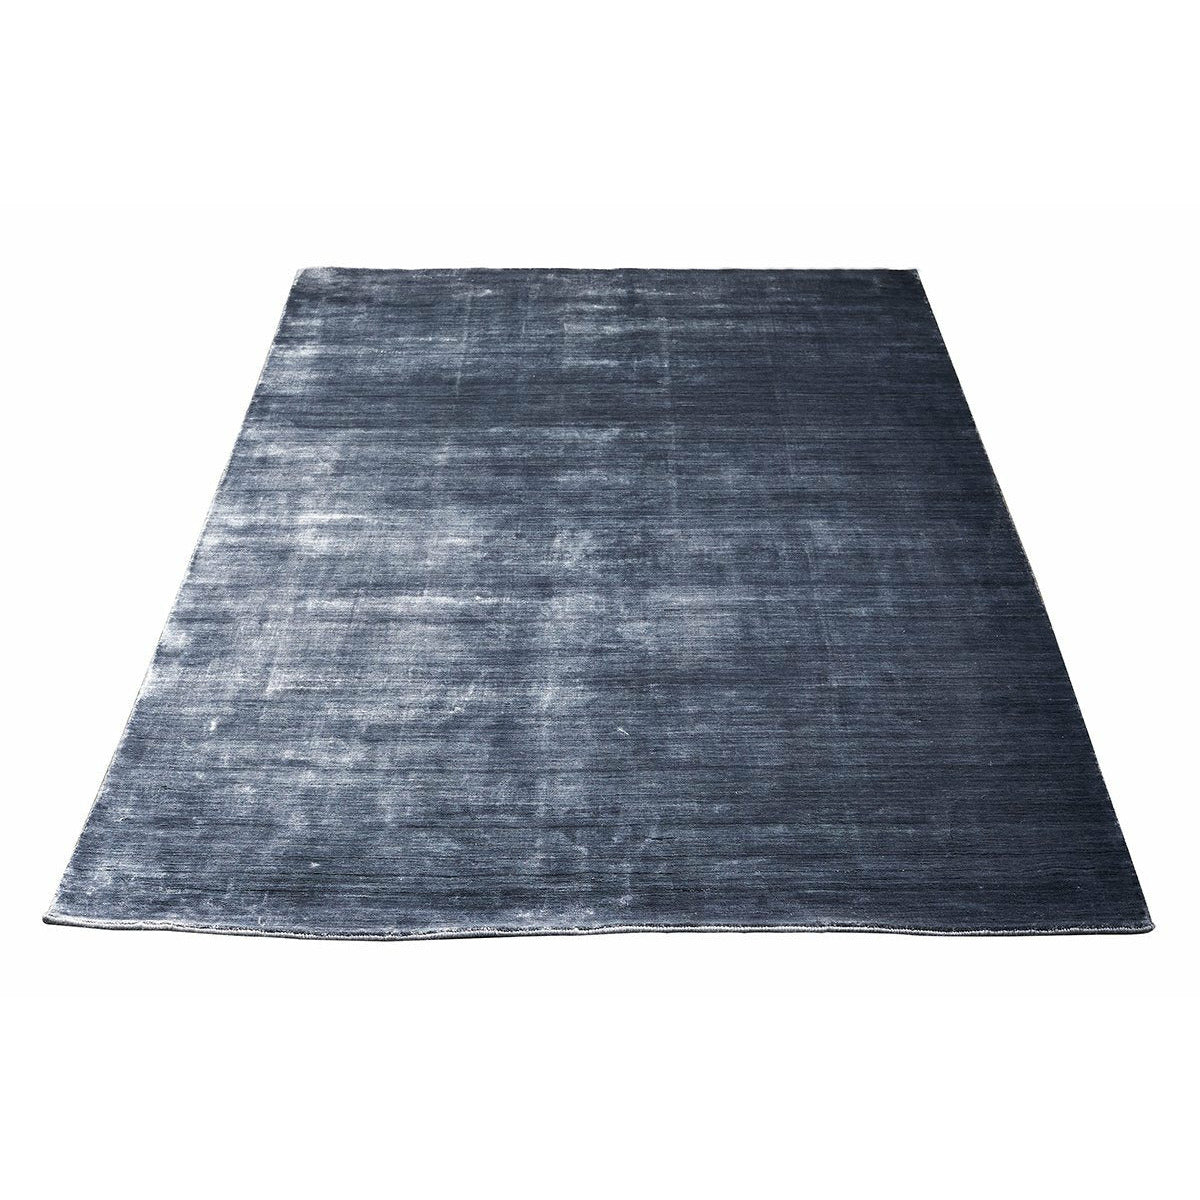 Massimo Bambu mattan stål svart, 250x300 cm